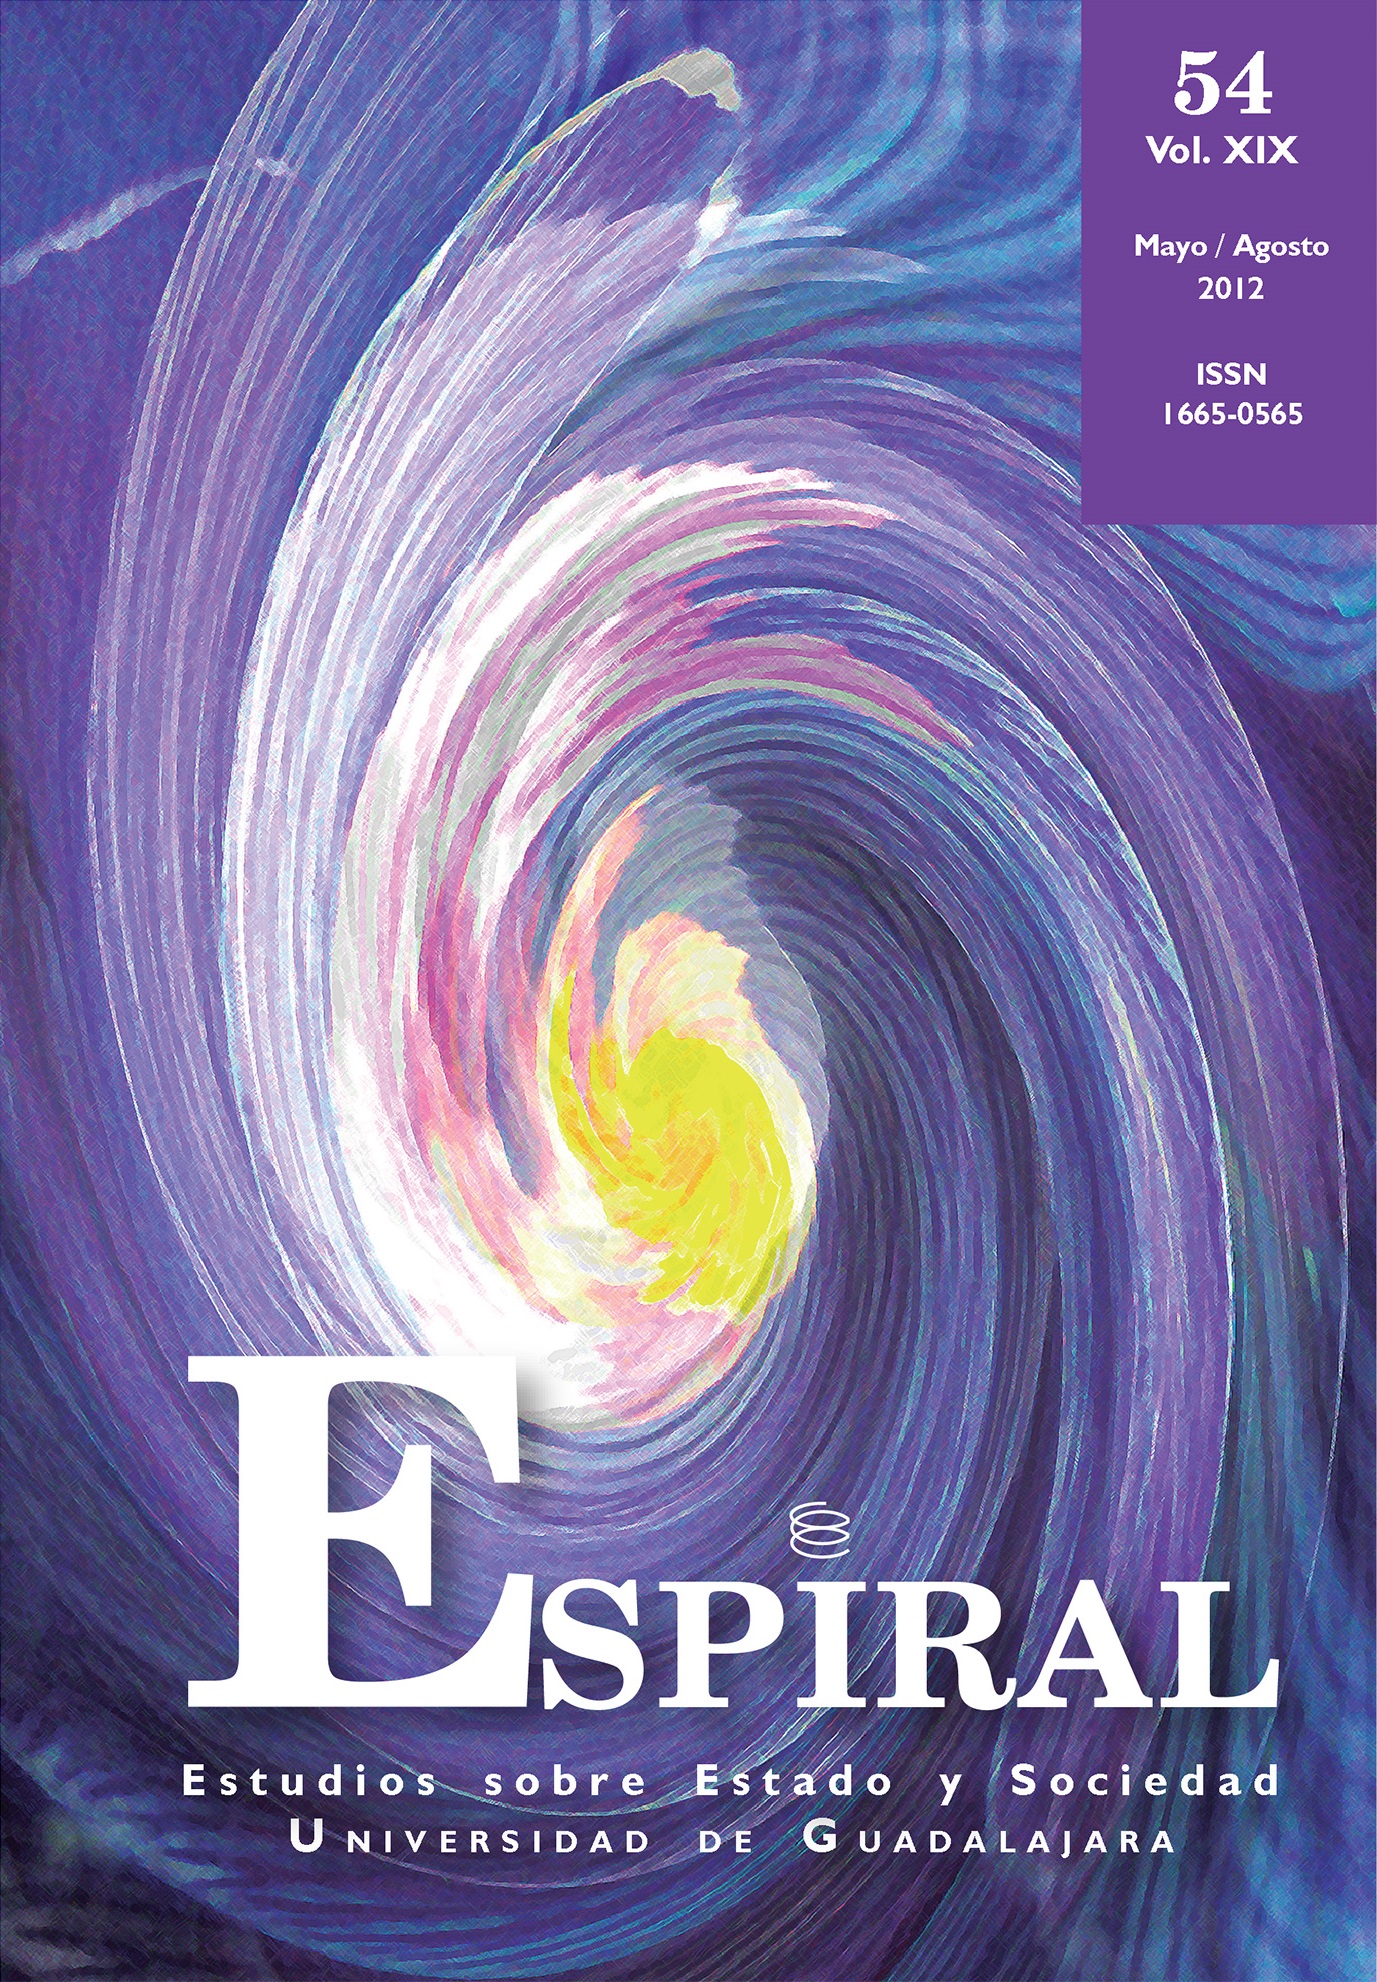 					Ver Vol. 19 Núm. 54: Espiral 54 (mayo-agosto 2012)
				